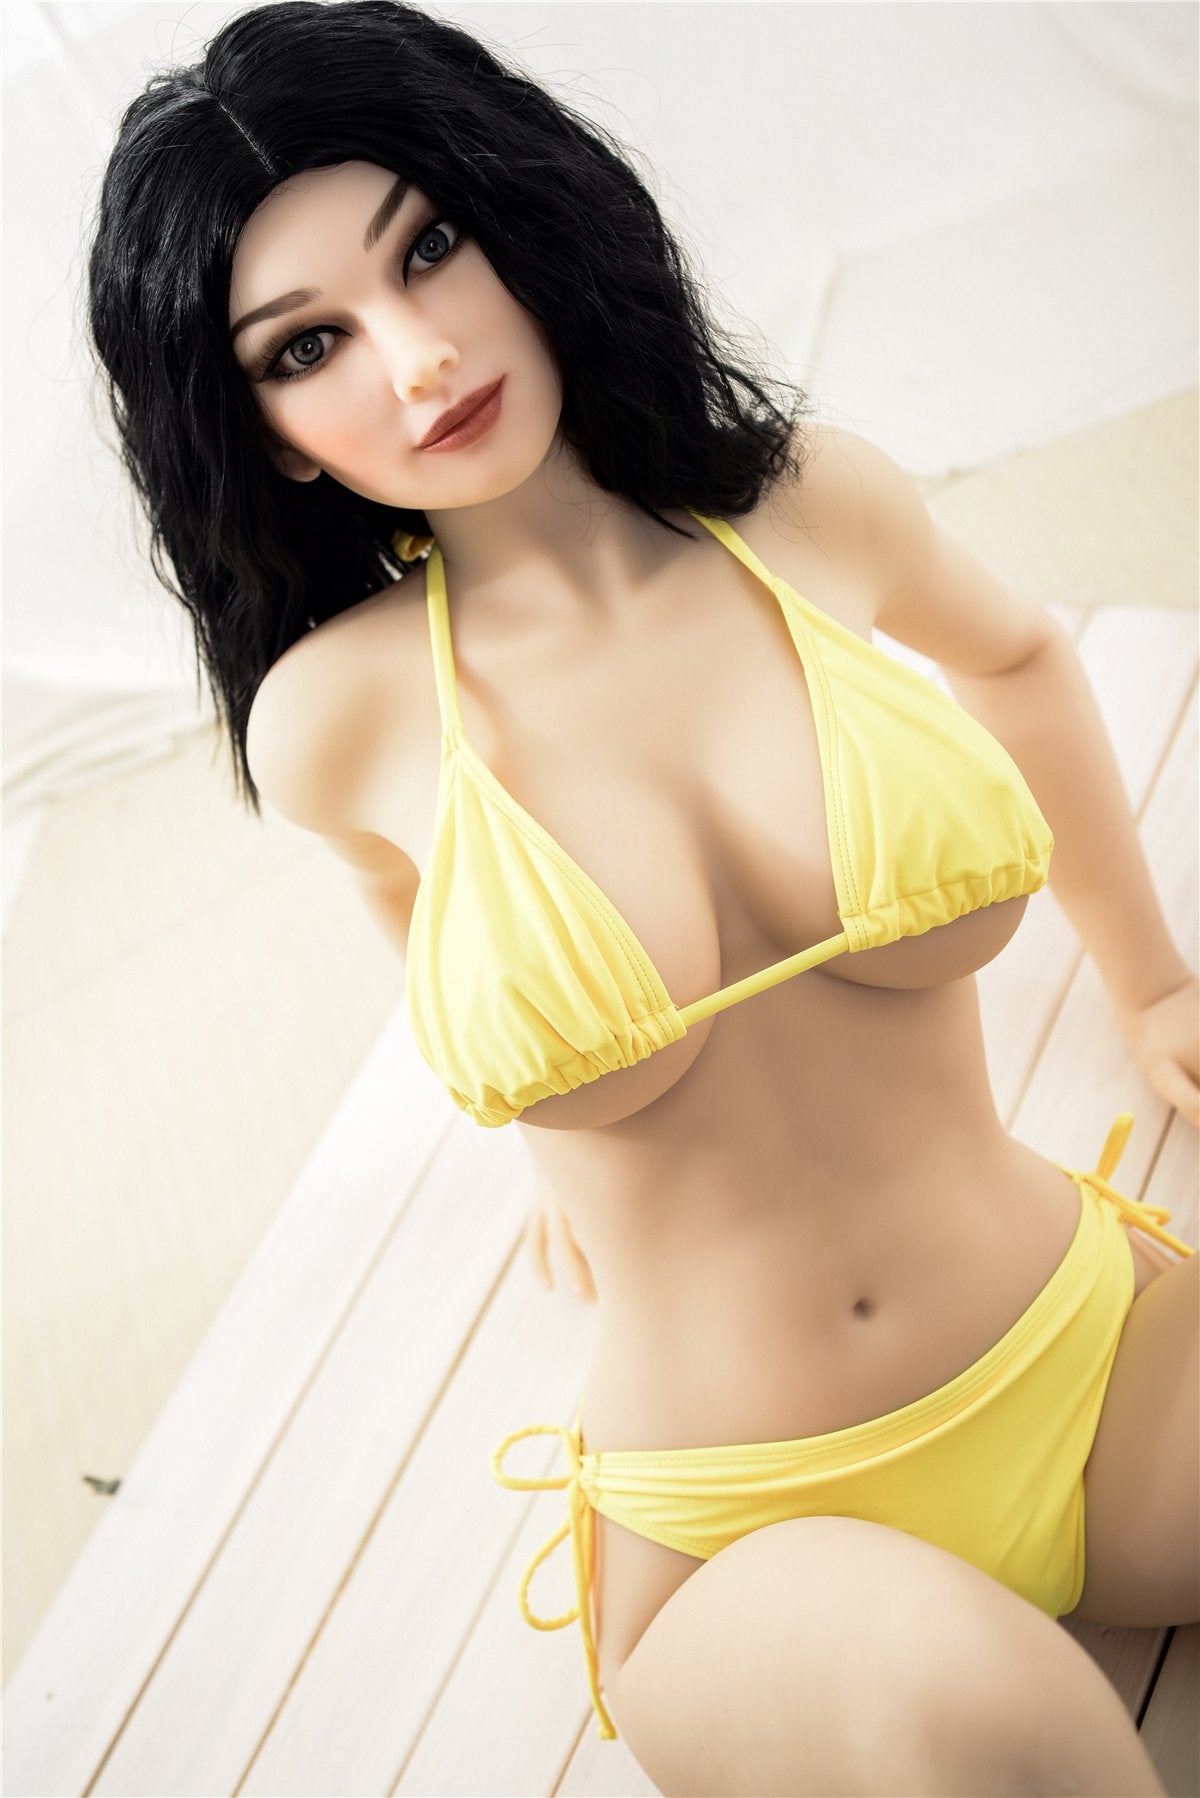 trina 155cm black hair medium tits skinny flat chested tpe sex doll(2)